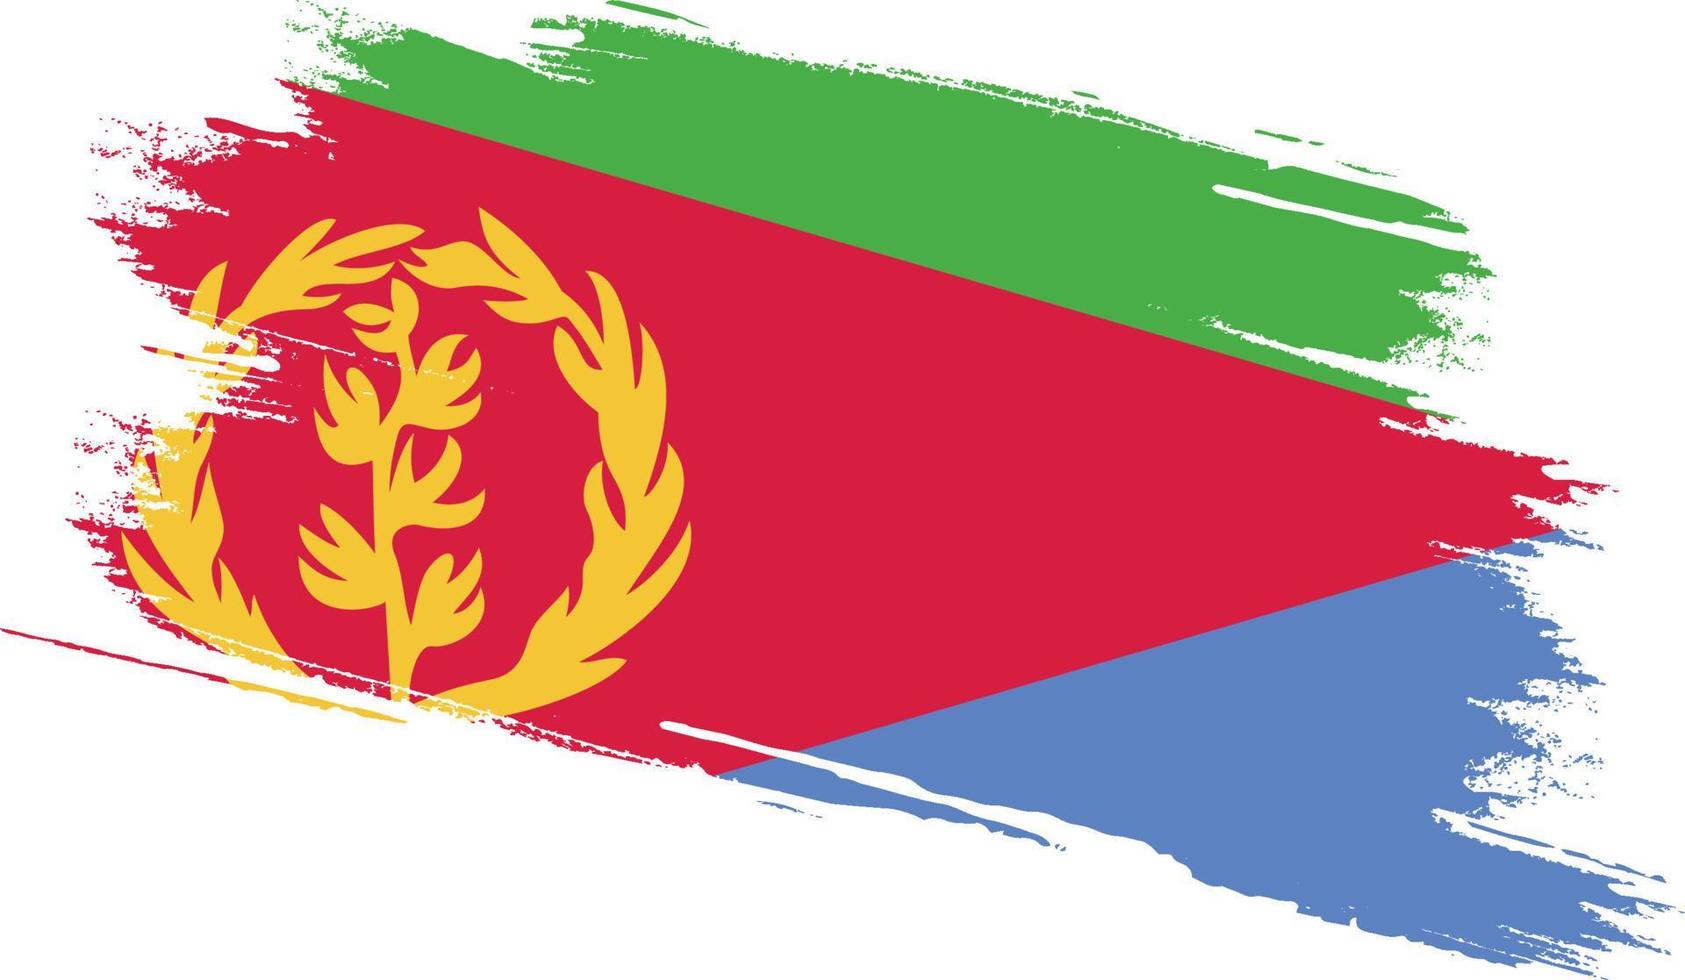 bandera de eritrea con textura grunge vector